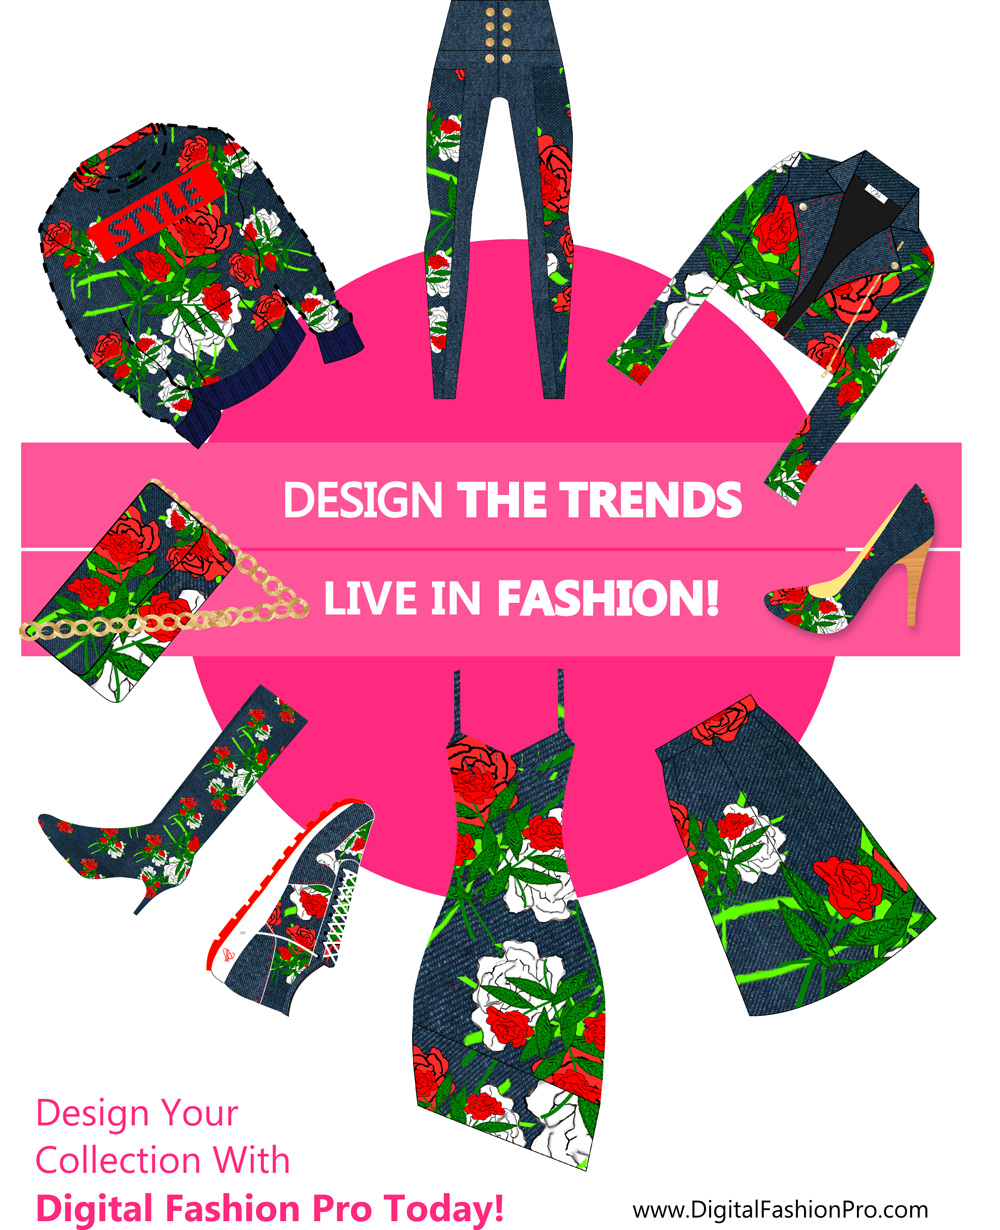 Fashion Magazine - Digital Fashion Pro - Fashion Design Software - how to design clothing